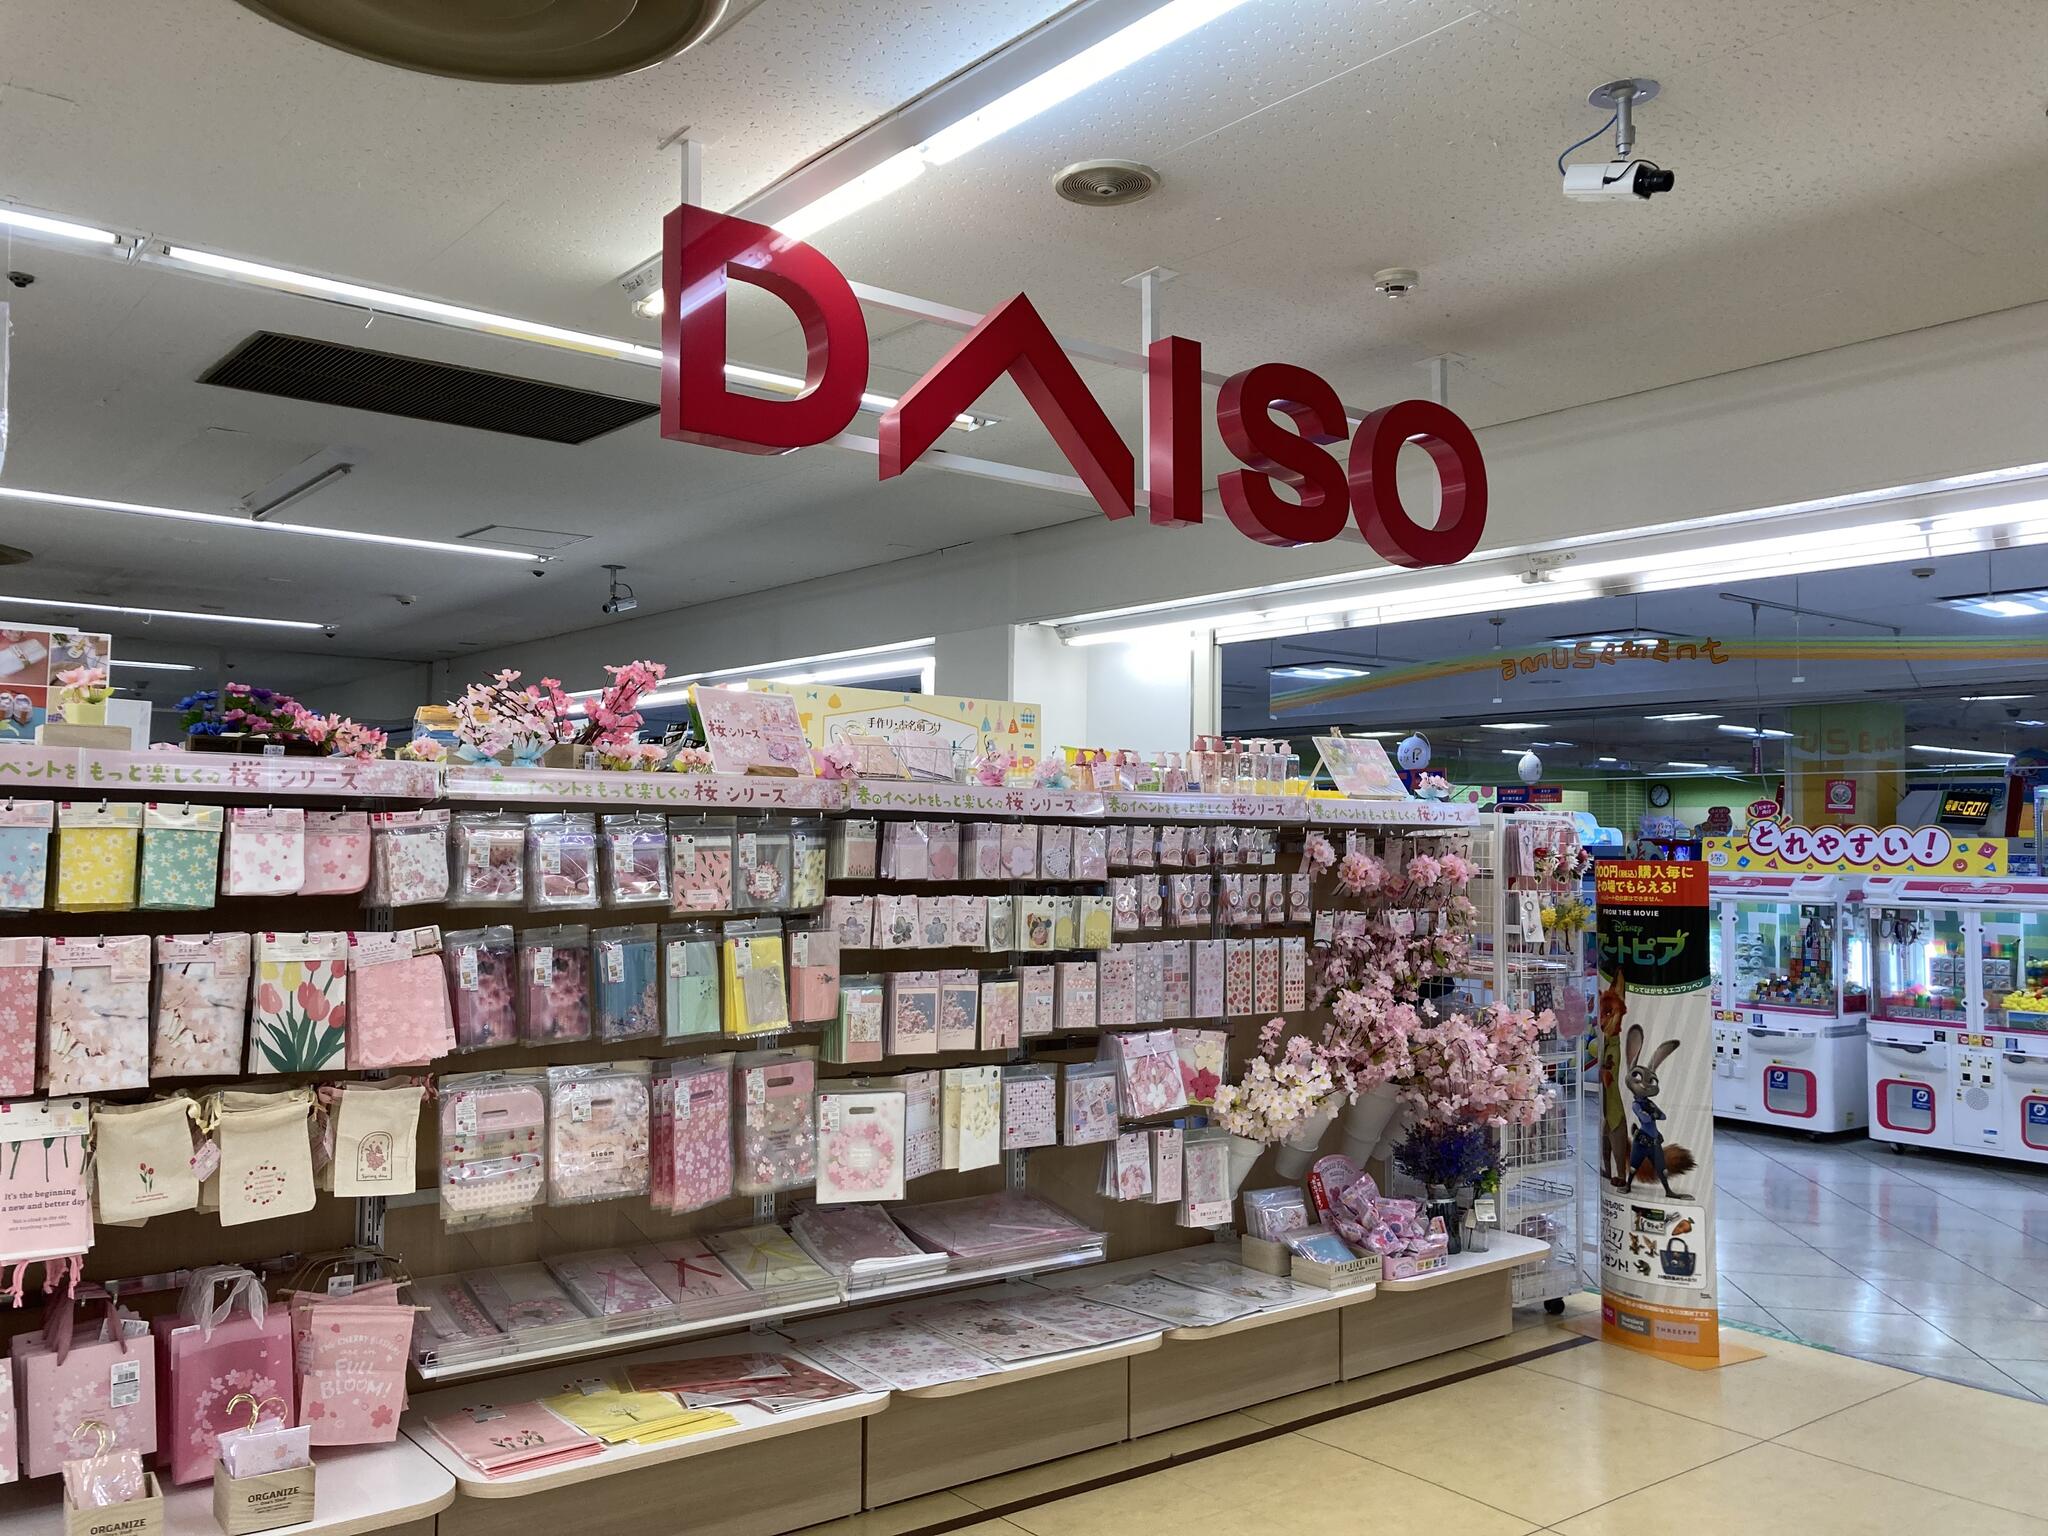 DAISO イオン西宮店の代表写真3